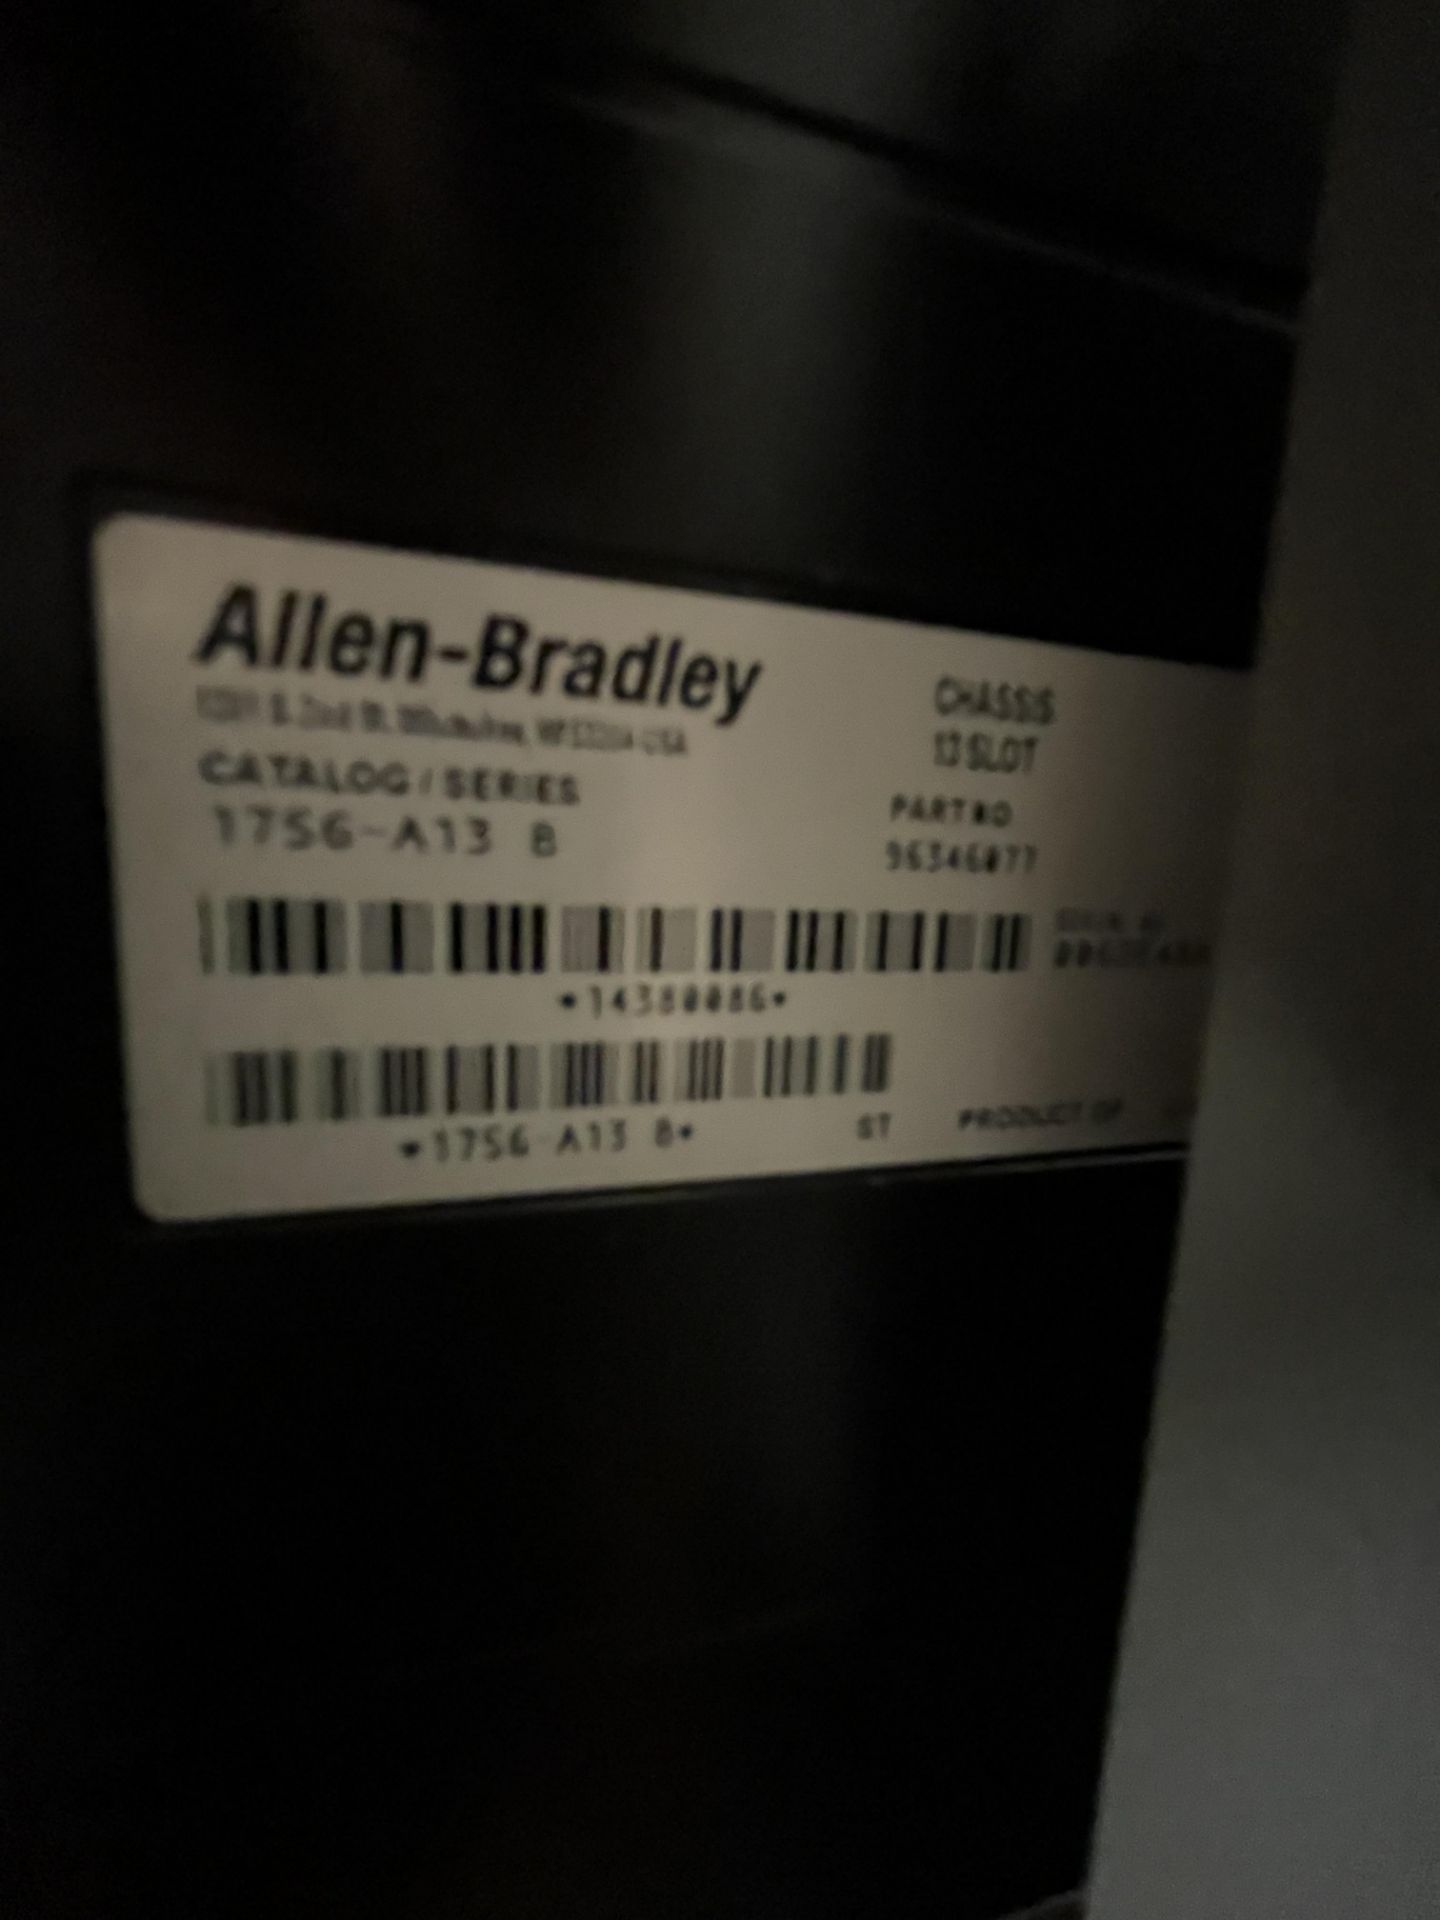 (2) ALLEN-BRADLEY PLC RACKS 13 SLOT CATALOG SERIES 1756-A13 B - Image 2 of 6